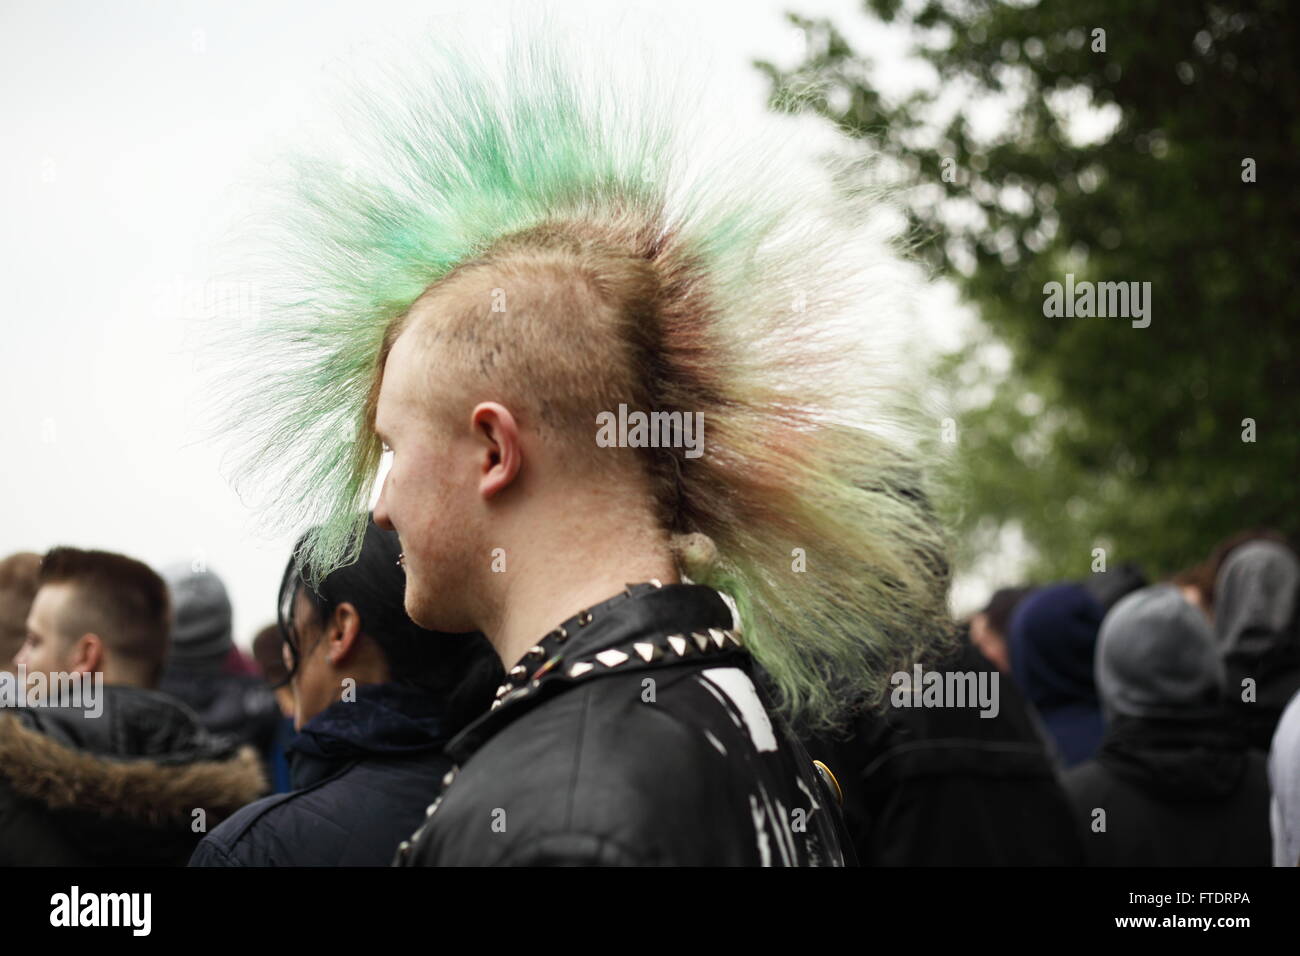 Man wearing a punk style hear at London Hyde park Stock Photo - Alamy